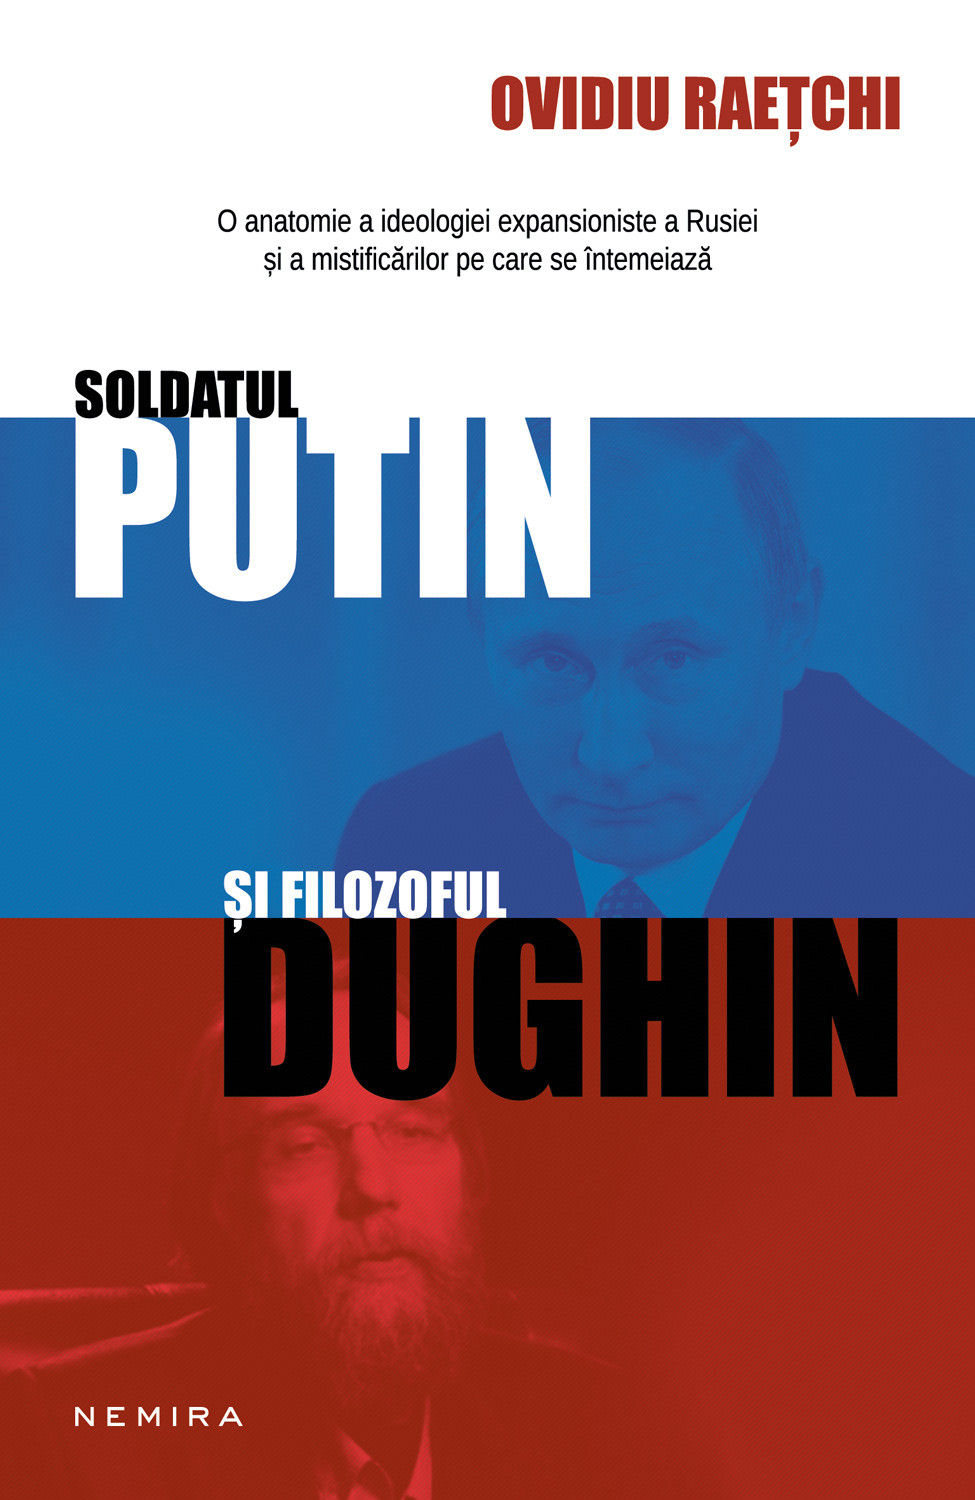 Soldatul Putin si filozoful Dughin